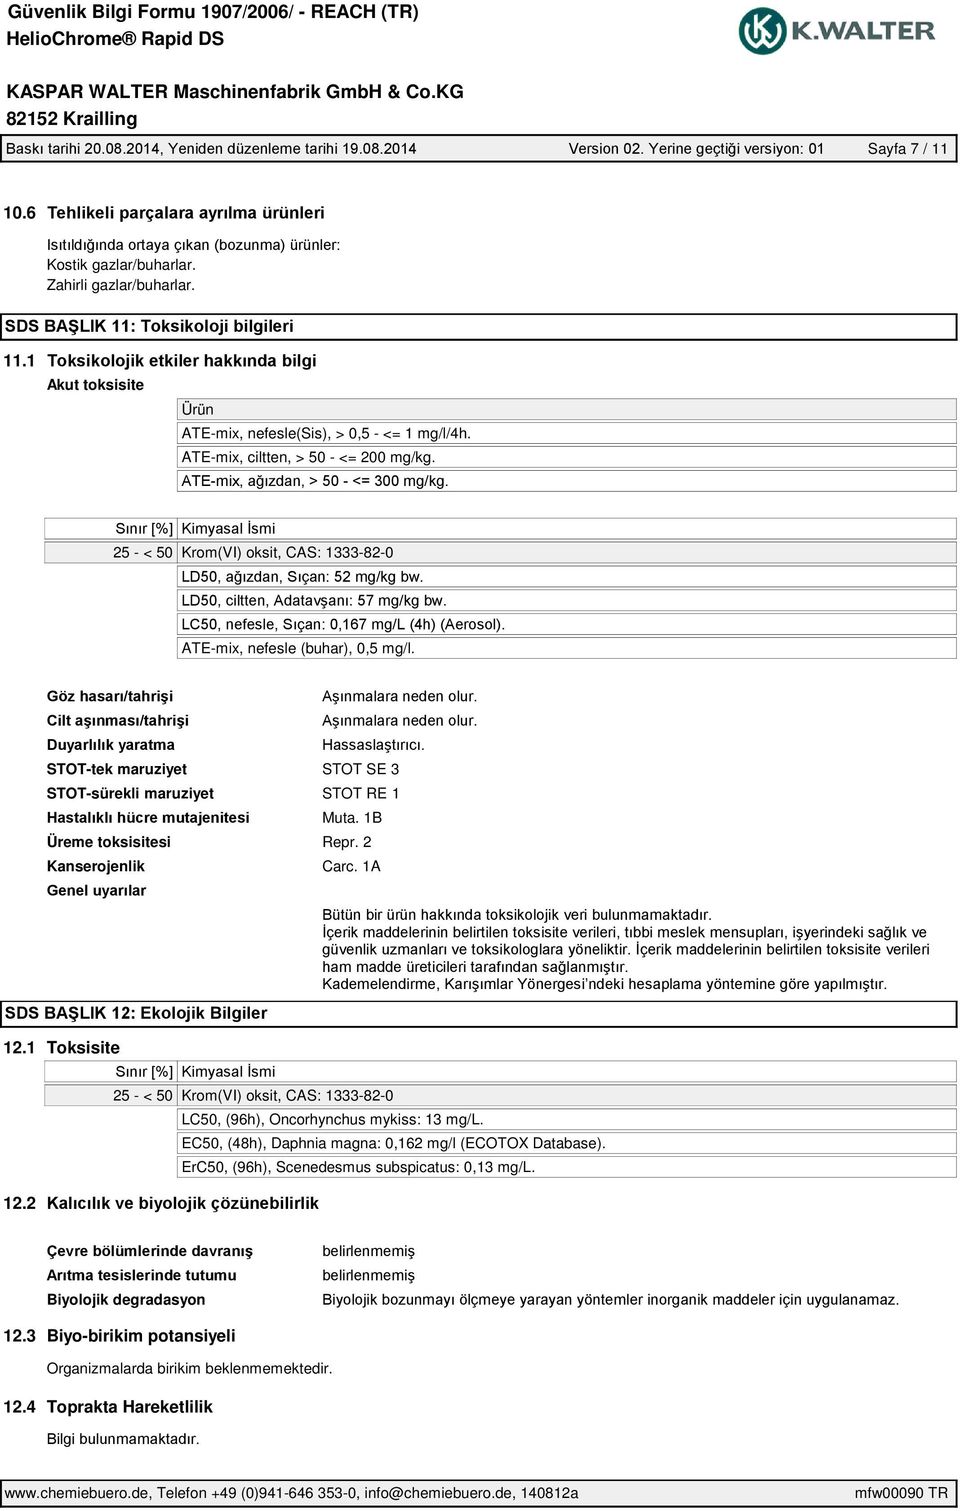 2 Kanserojenlik 12.1 Toksisite Carc. 1A 25 - < 50 Krom(VI) oksit, CAS: 1333-82-0 12.2 LC50, (96h), Oncorhynchus mykiss: 13 mg/l.